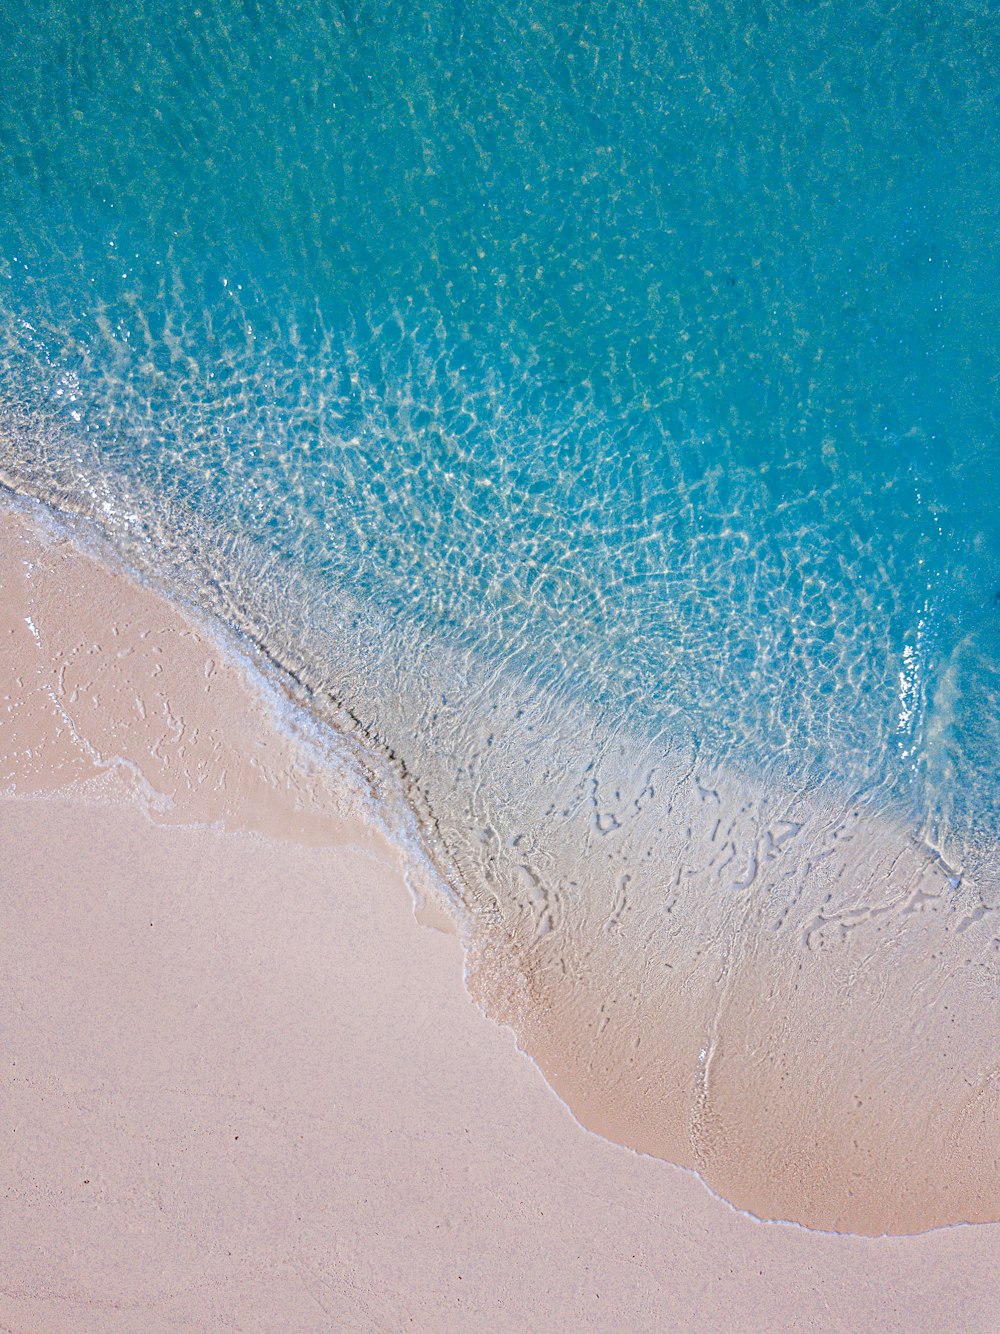 aerial photo of calm ocean